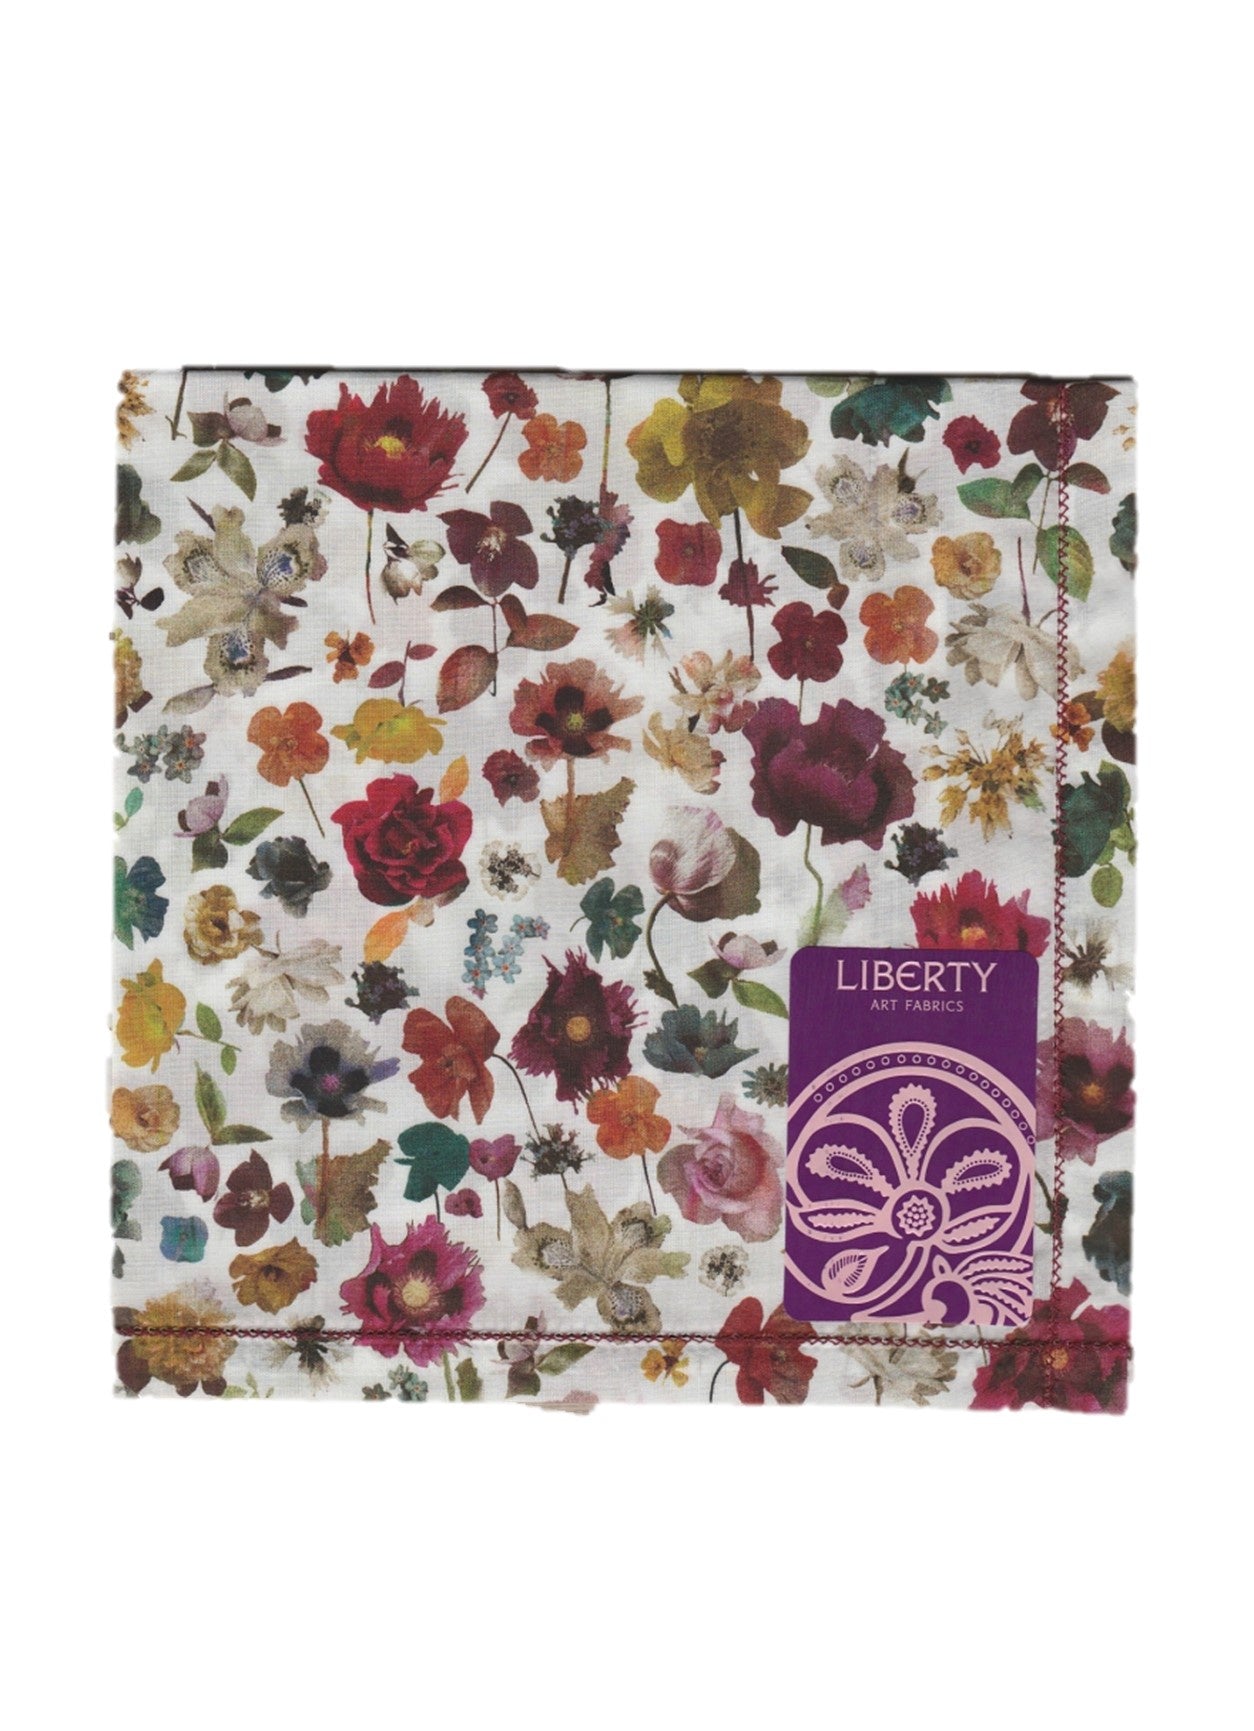 Handkerchief Liberty Art Fabric - Assorted Designs